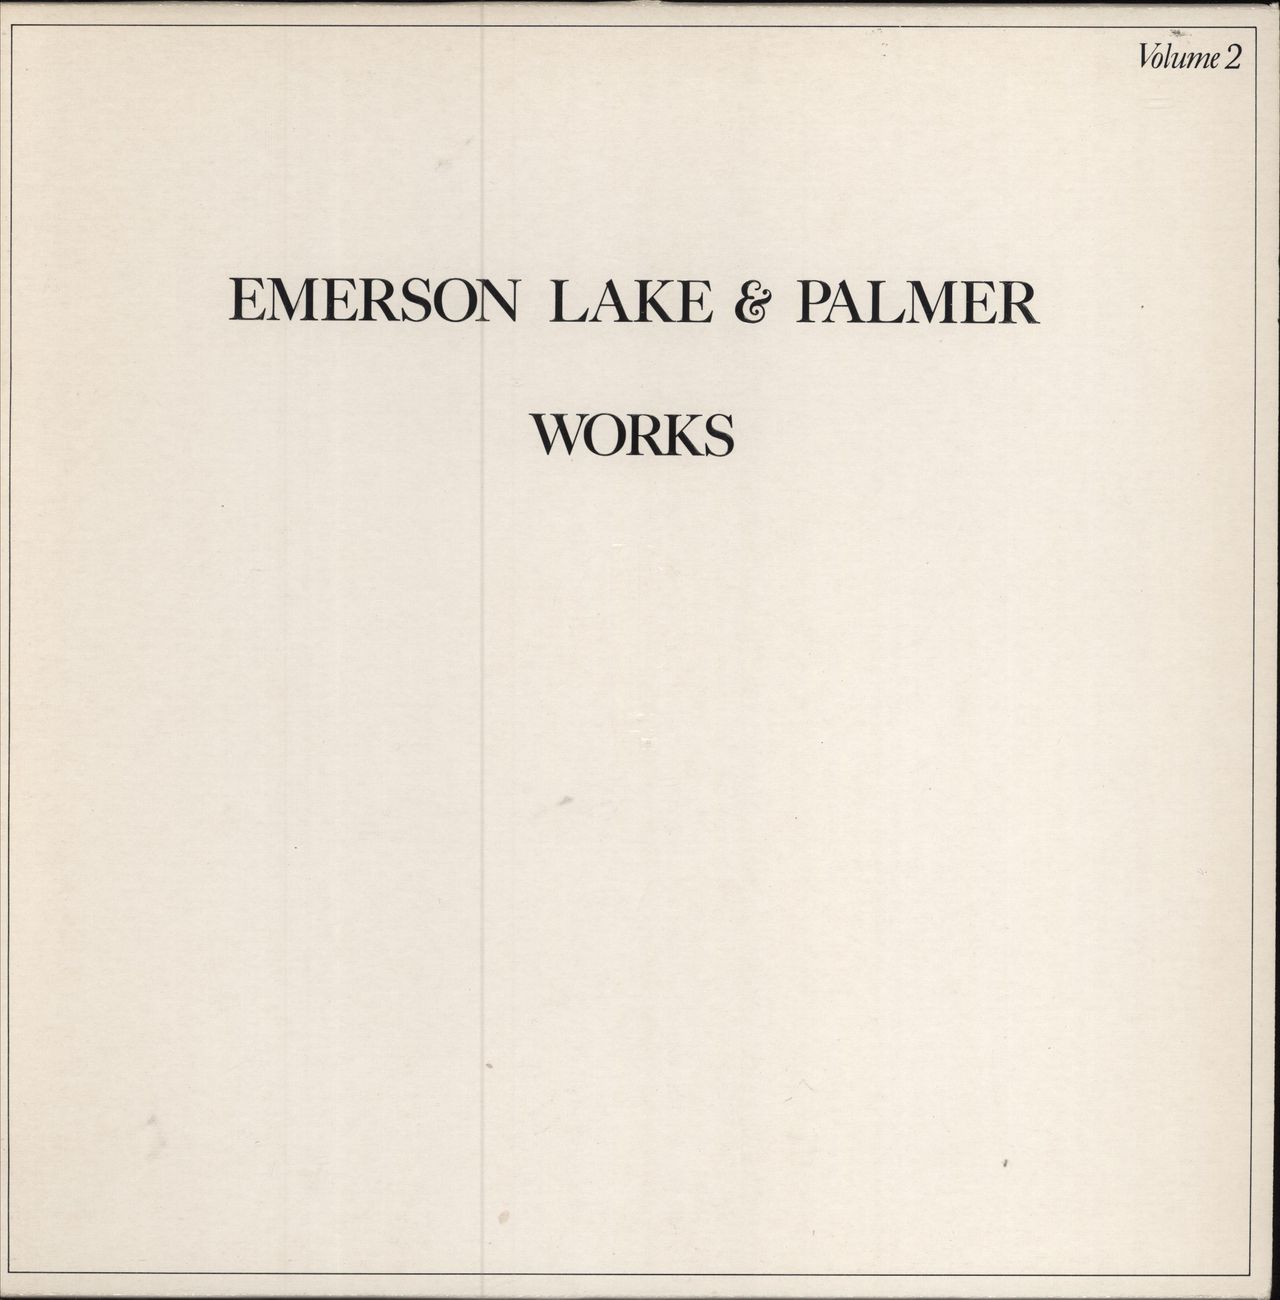 Emerson Lake & Palmer Works Volume 2 French vinyl LP album (LP record) 50422